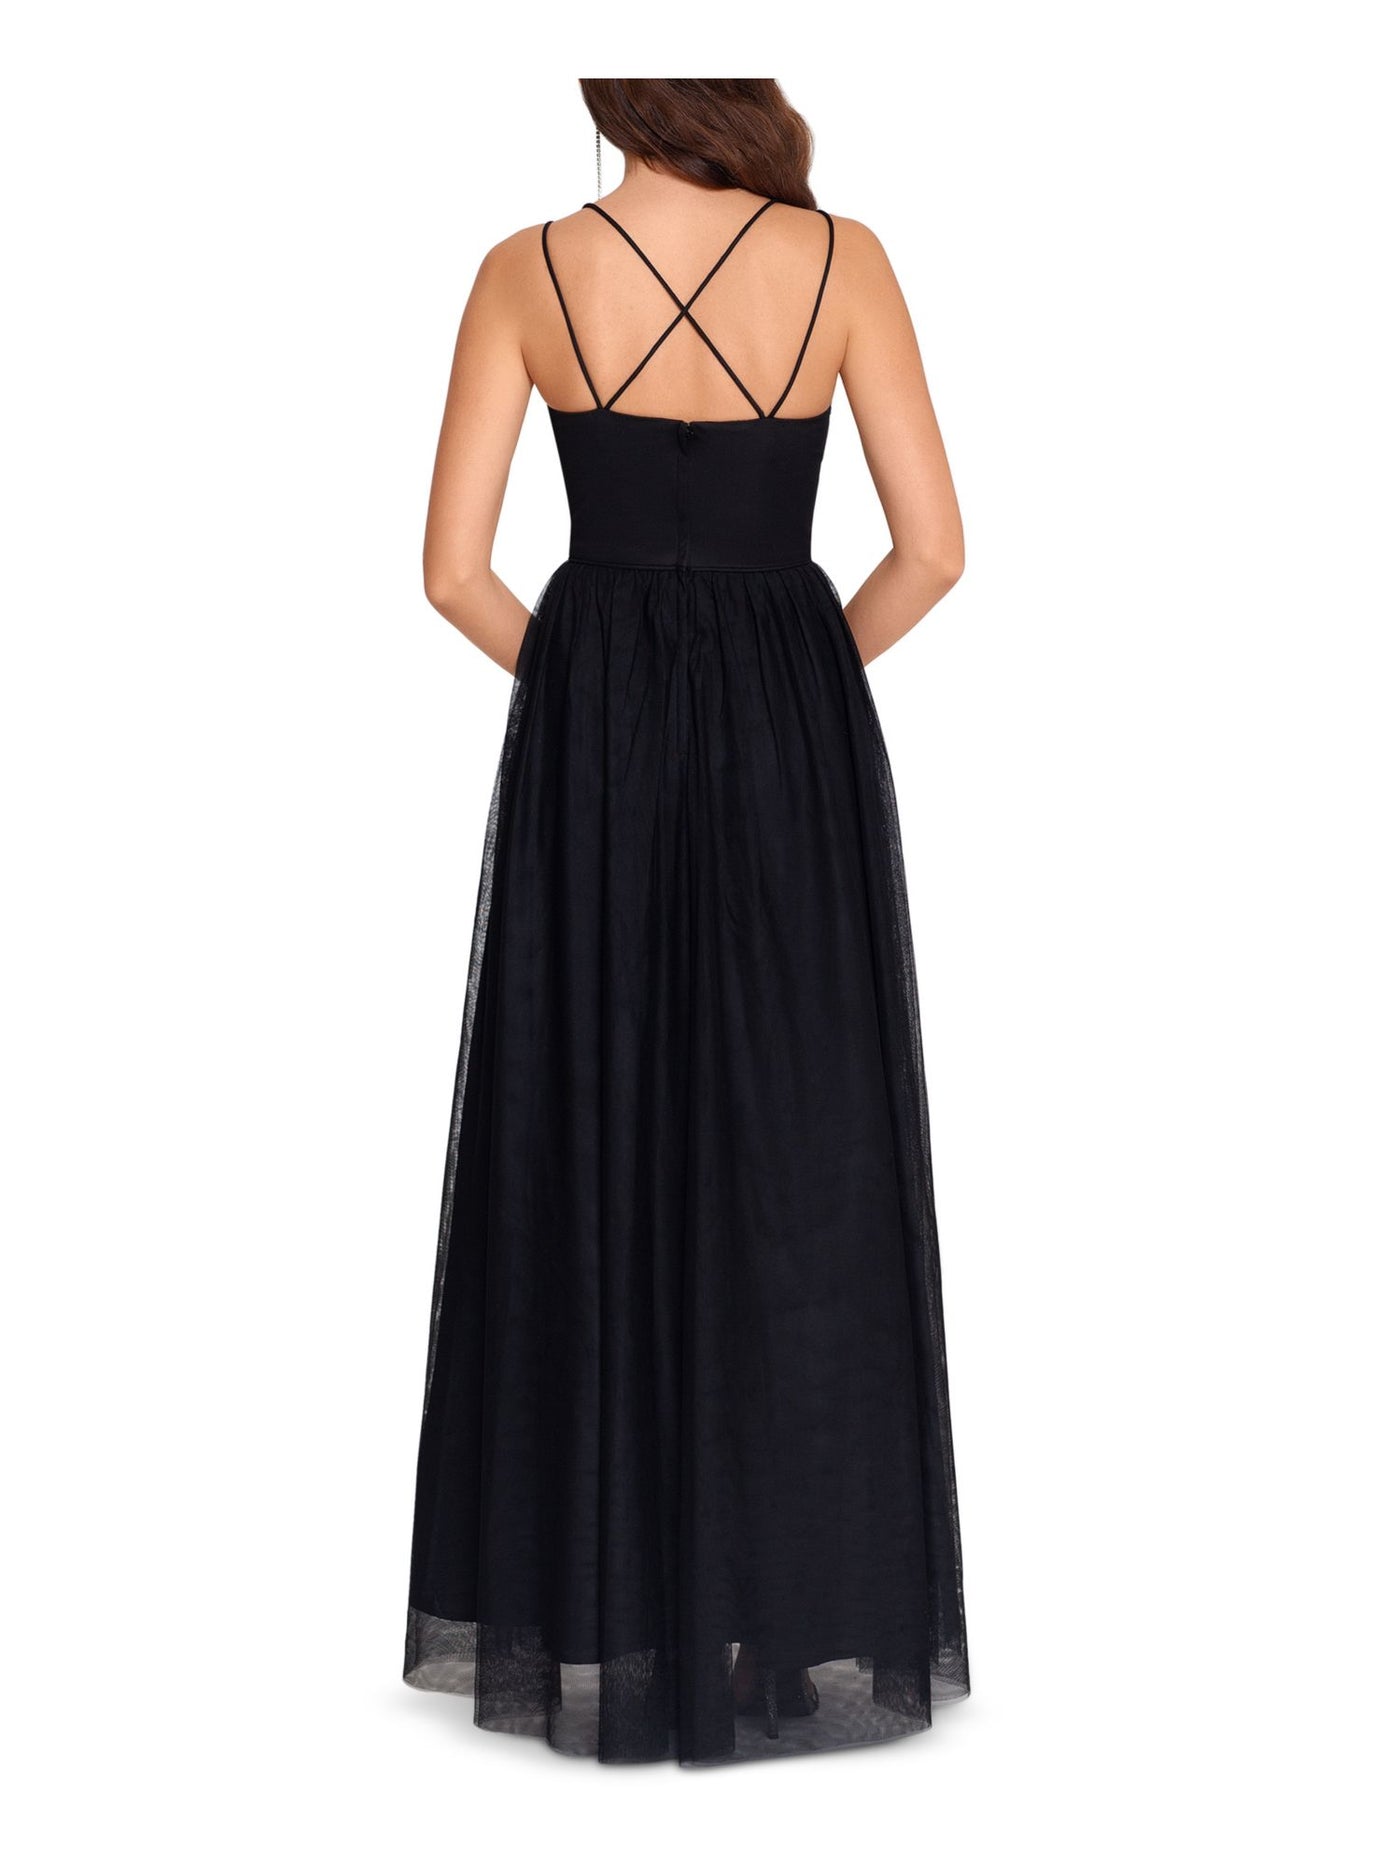 BLONDIE NITES Womens Embellished Spaghetti Strap Scoop Neck Full-Length Formal Fit + Flare Dress